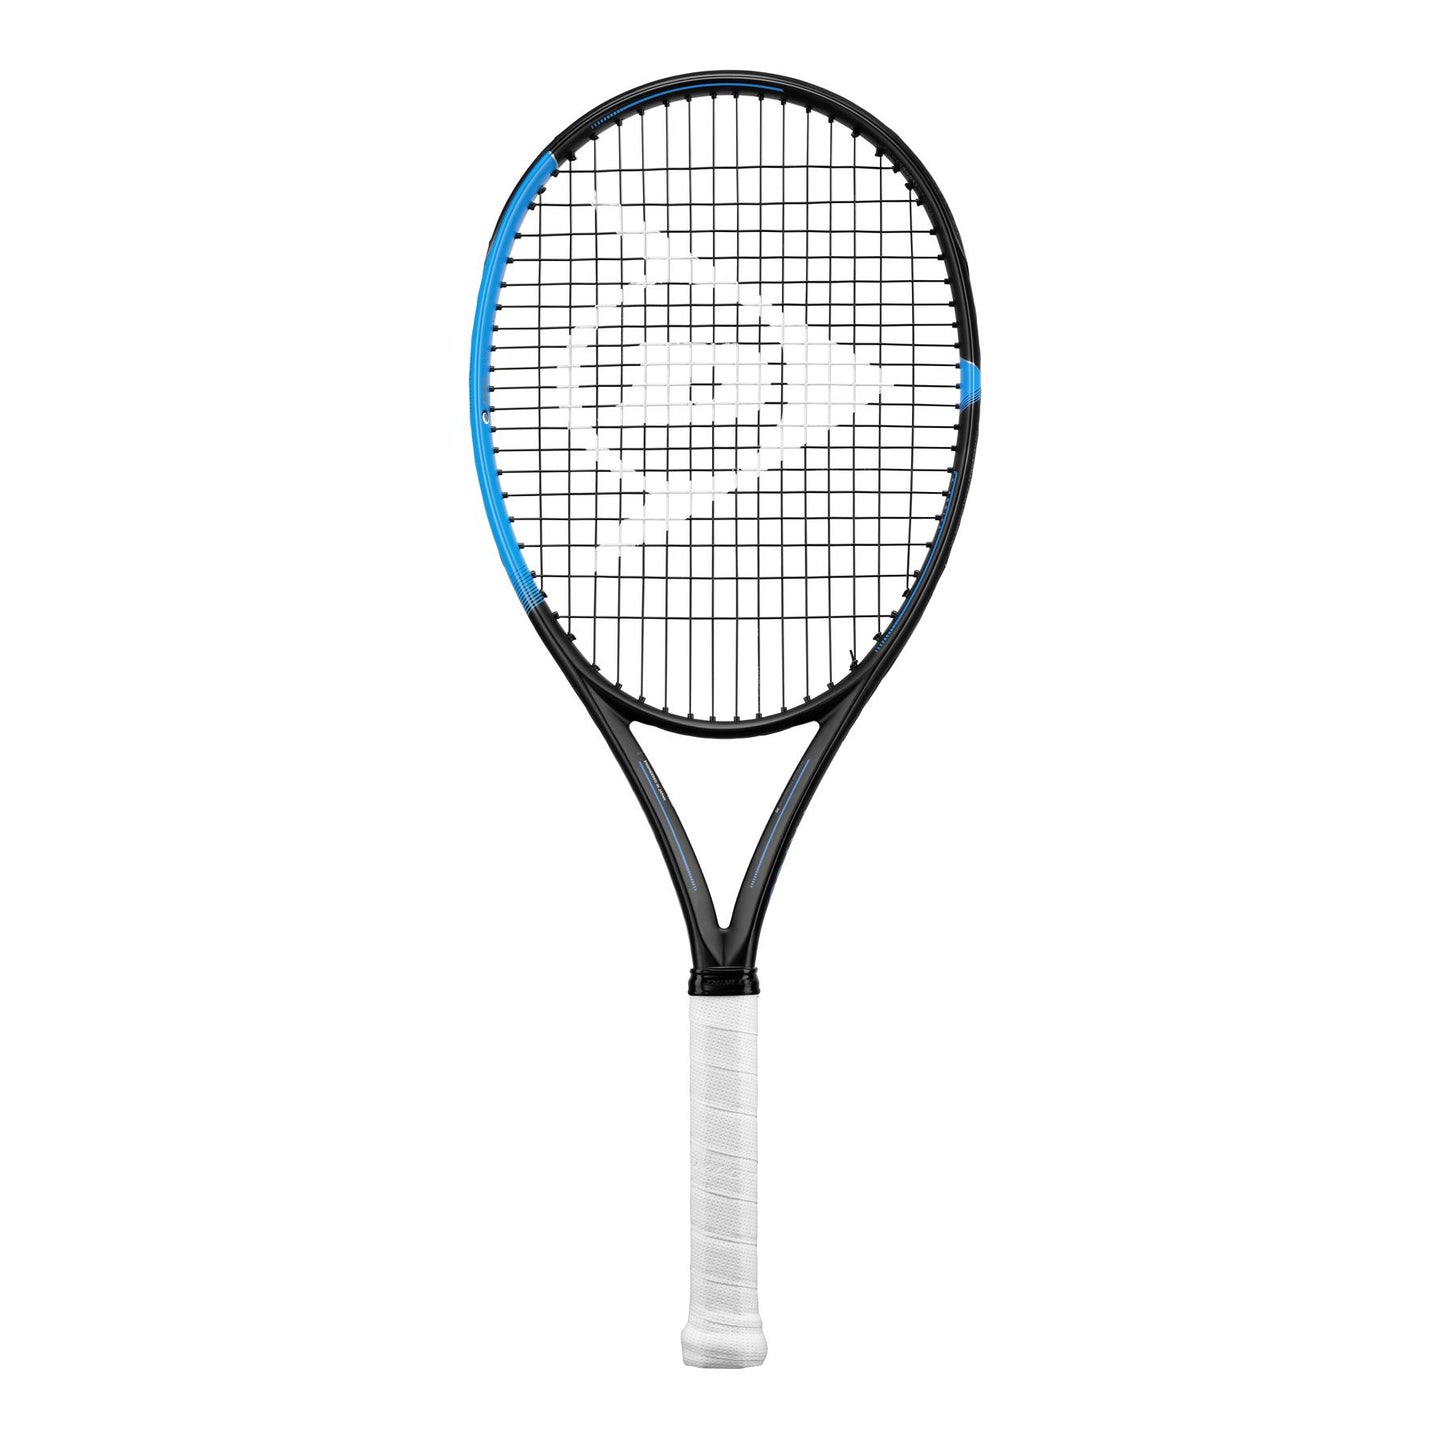 Dunlop FX 700 Tennis Racket - Black / Blue (Frame Only)